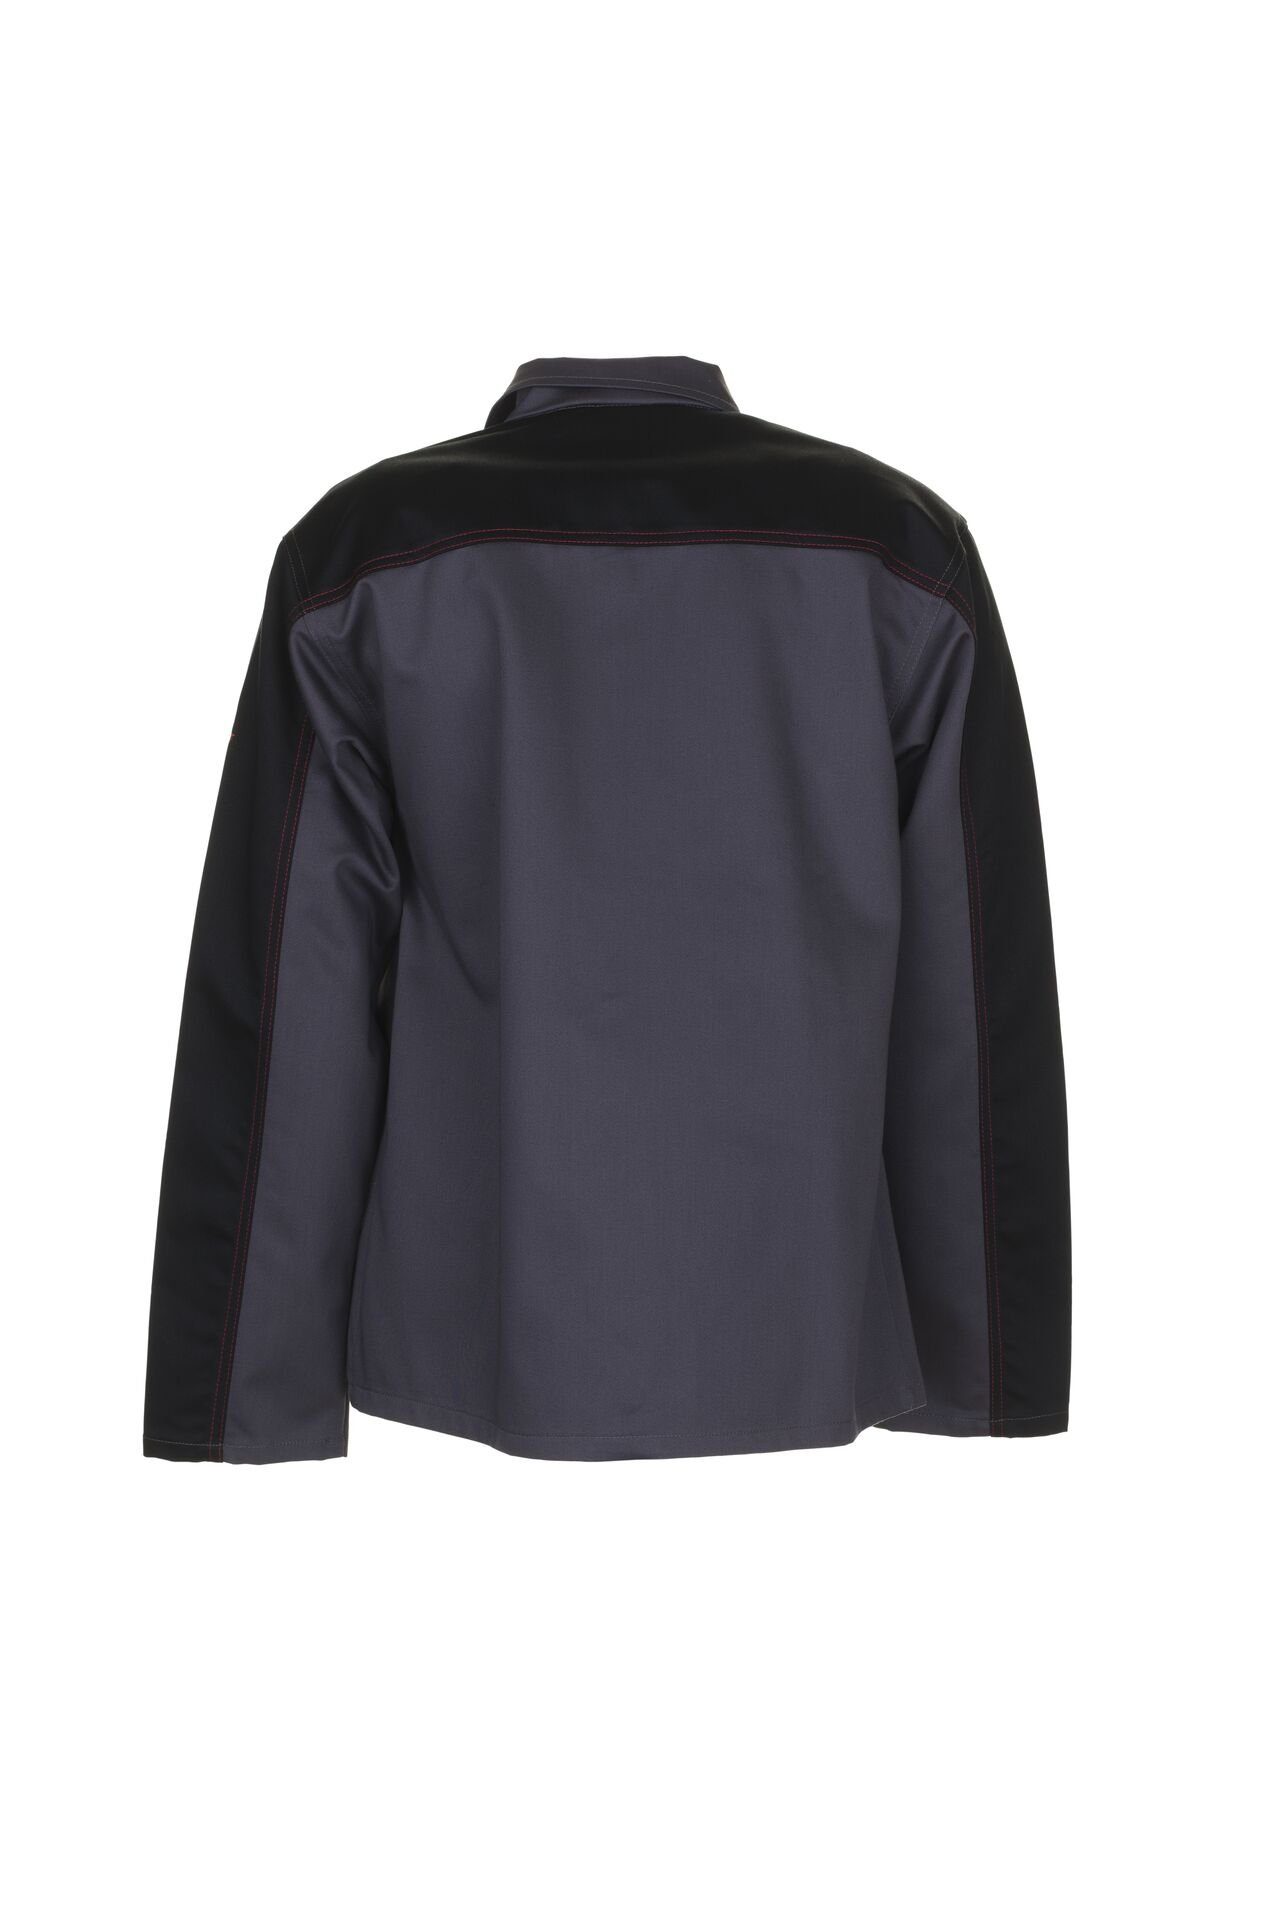 (1-tlg) grau/schwarz 52 Planam Arbeitshose Jacke Größe Weld Shield